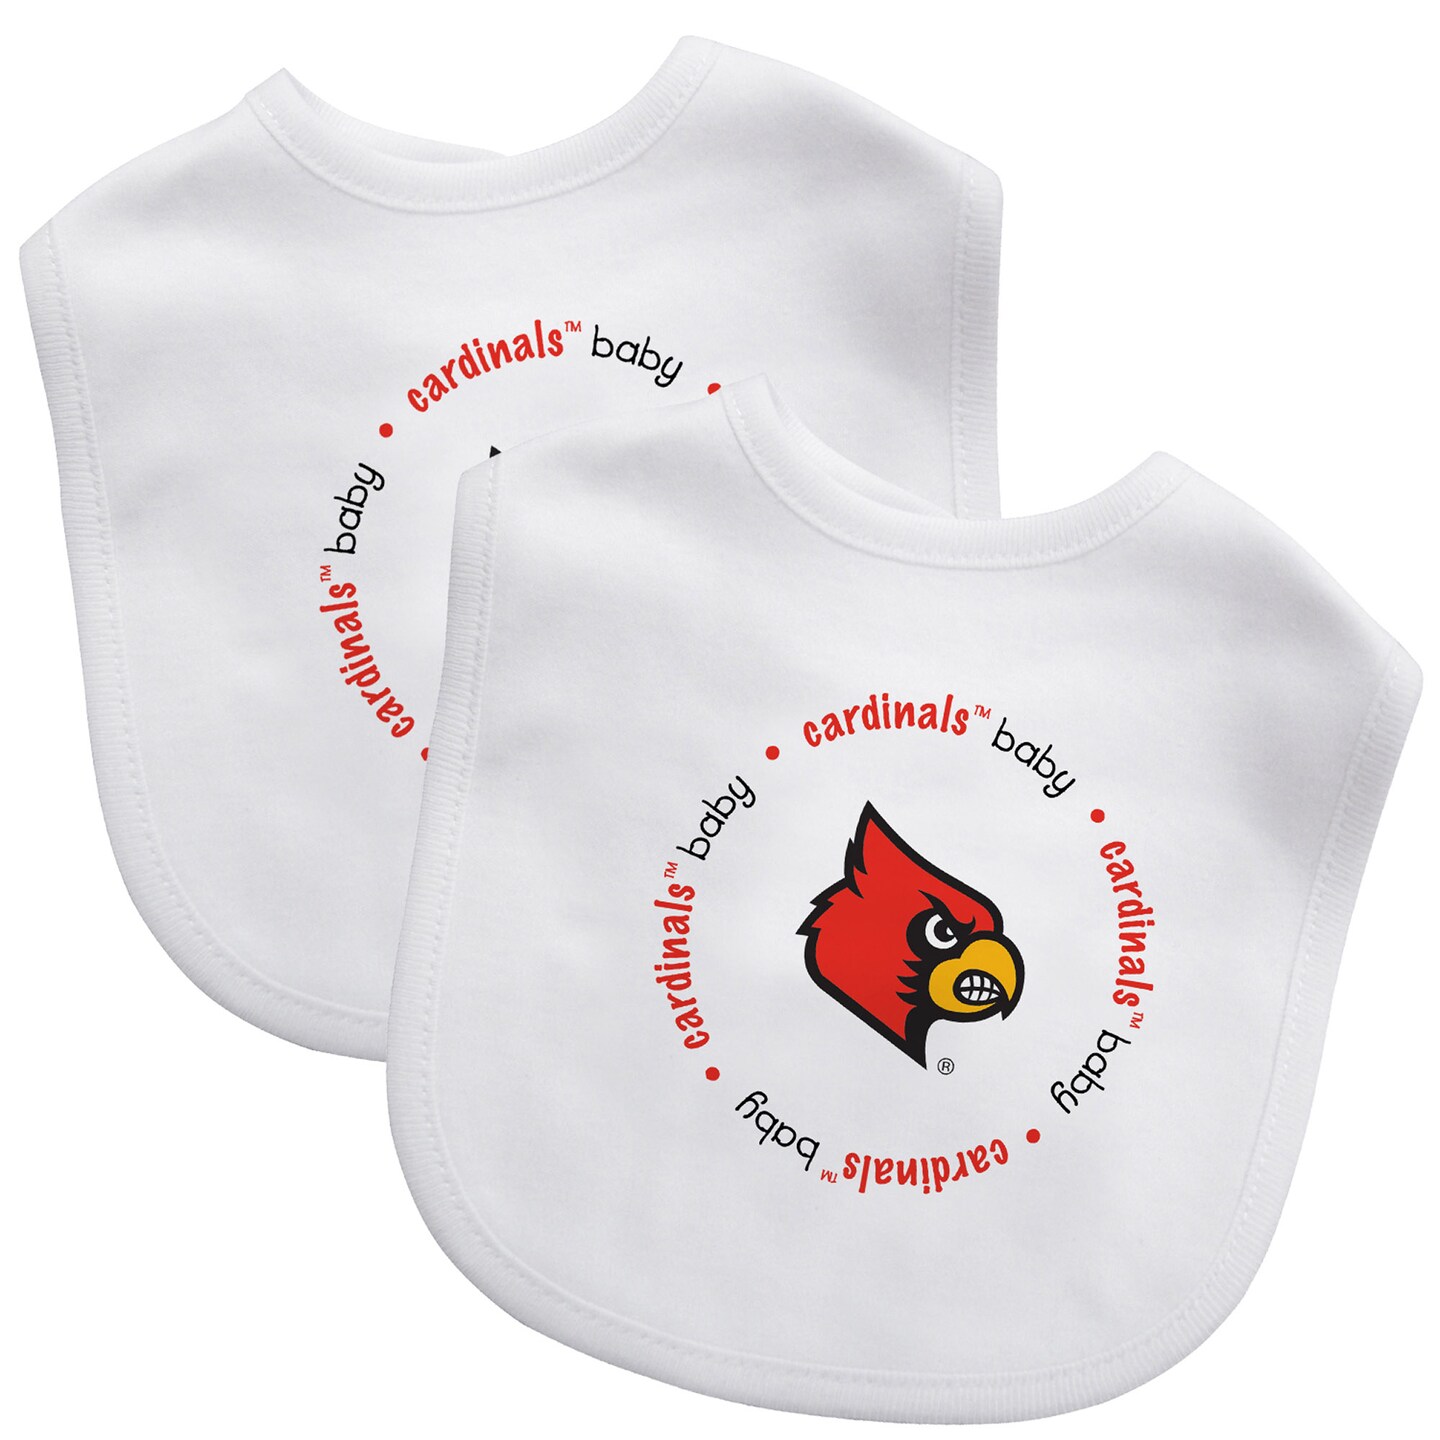 Unisex Children Louisville Cardinals NCAA Shirts for sale